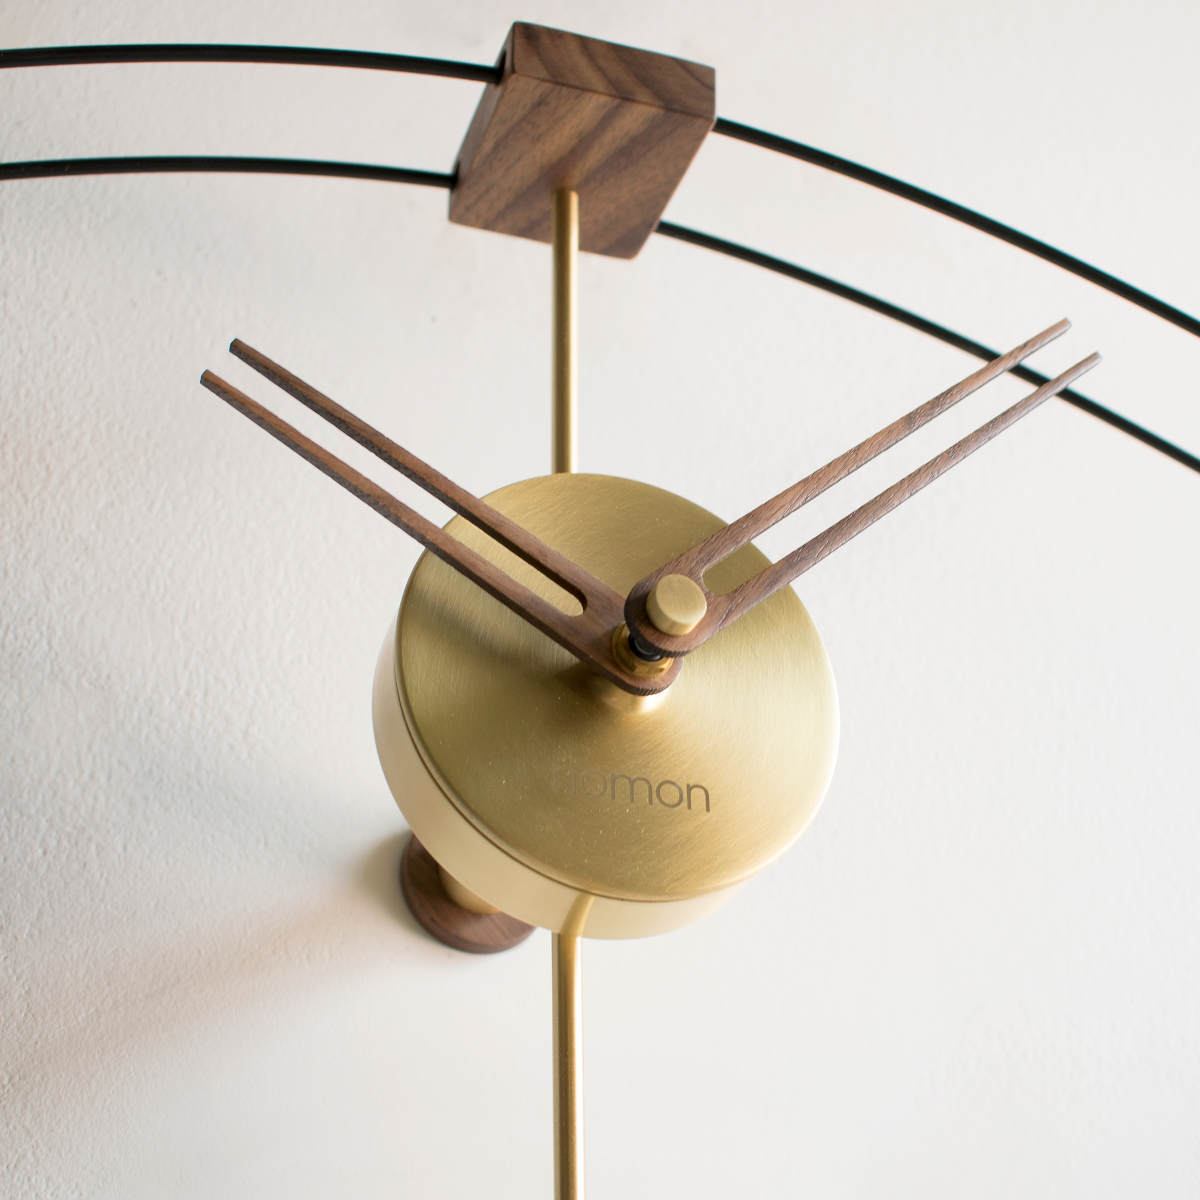 Design Wall Clock "Mini Look" made of Walnut and Fibre Glass